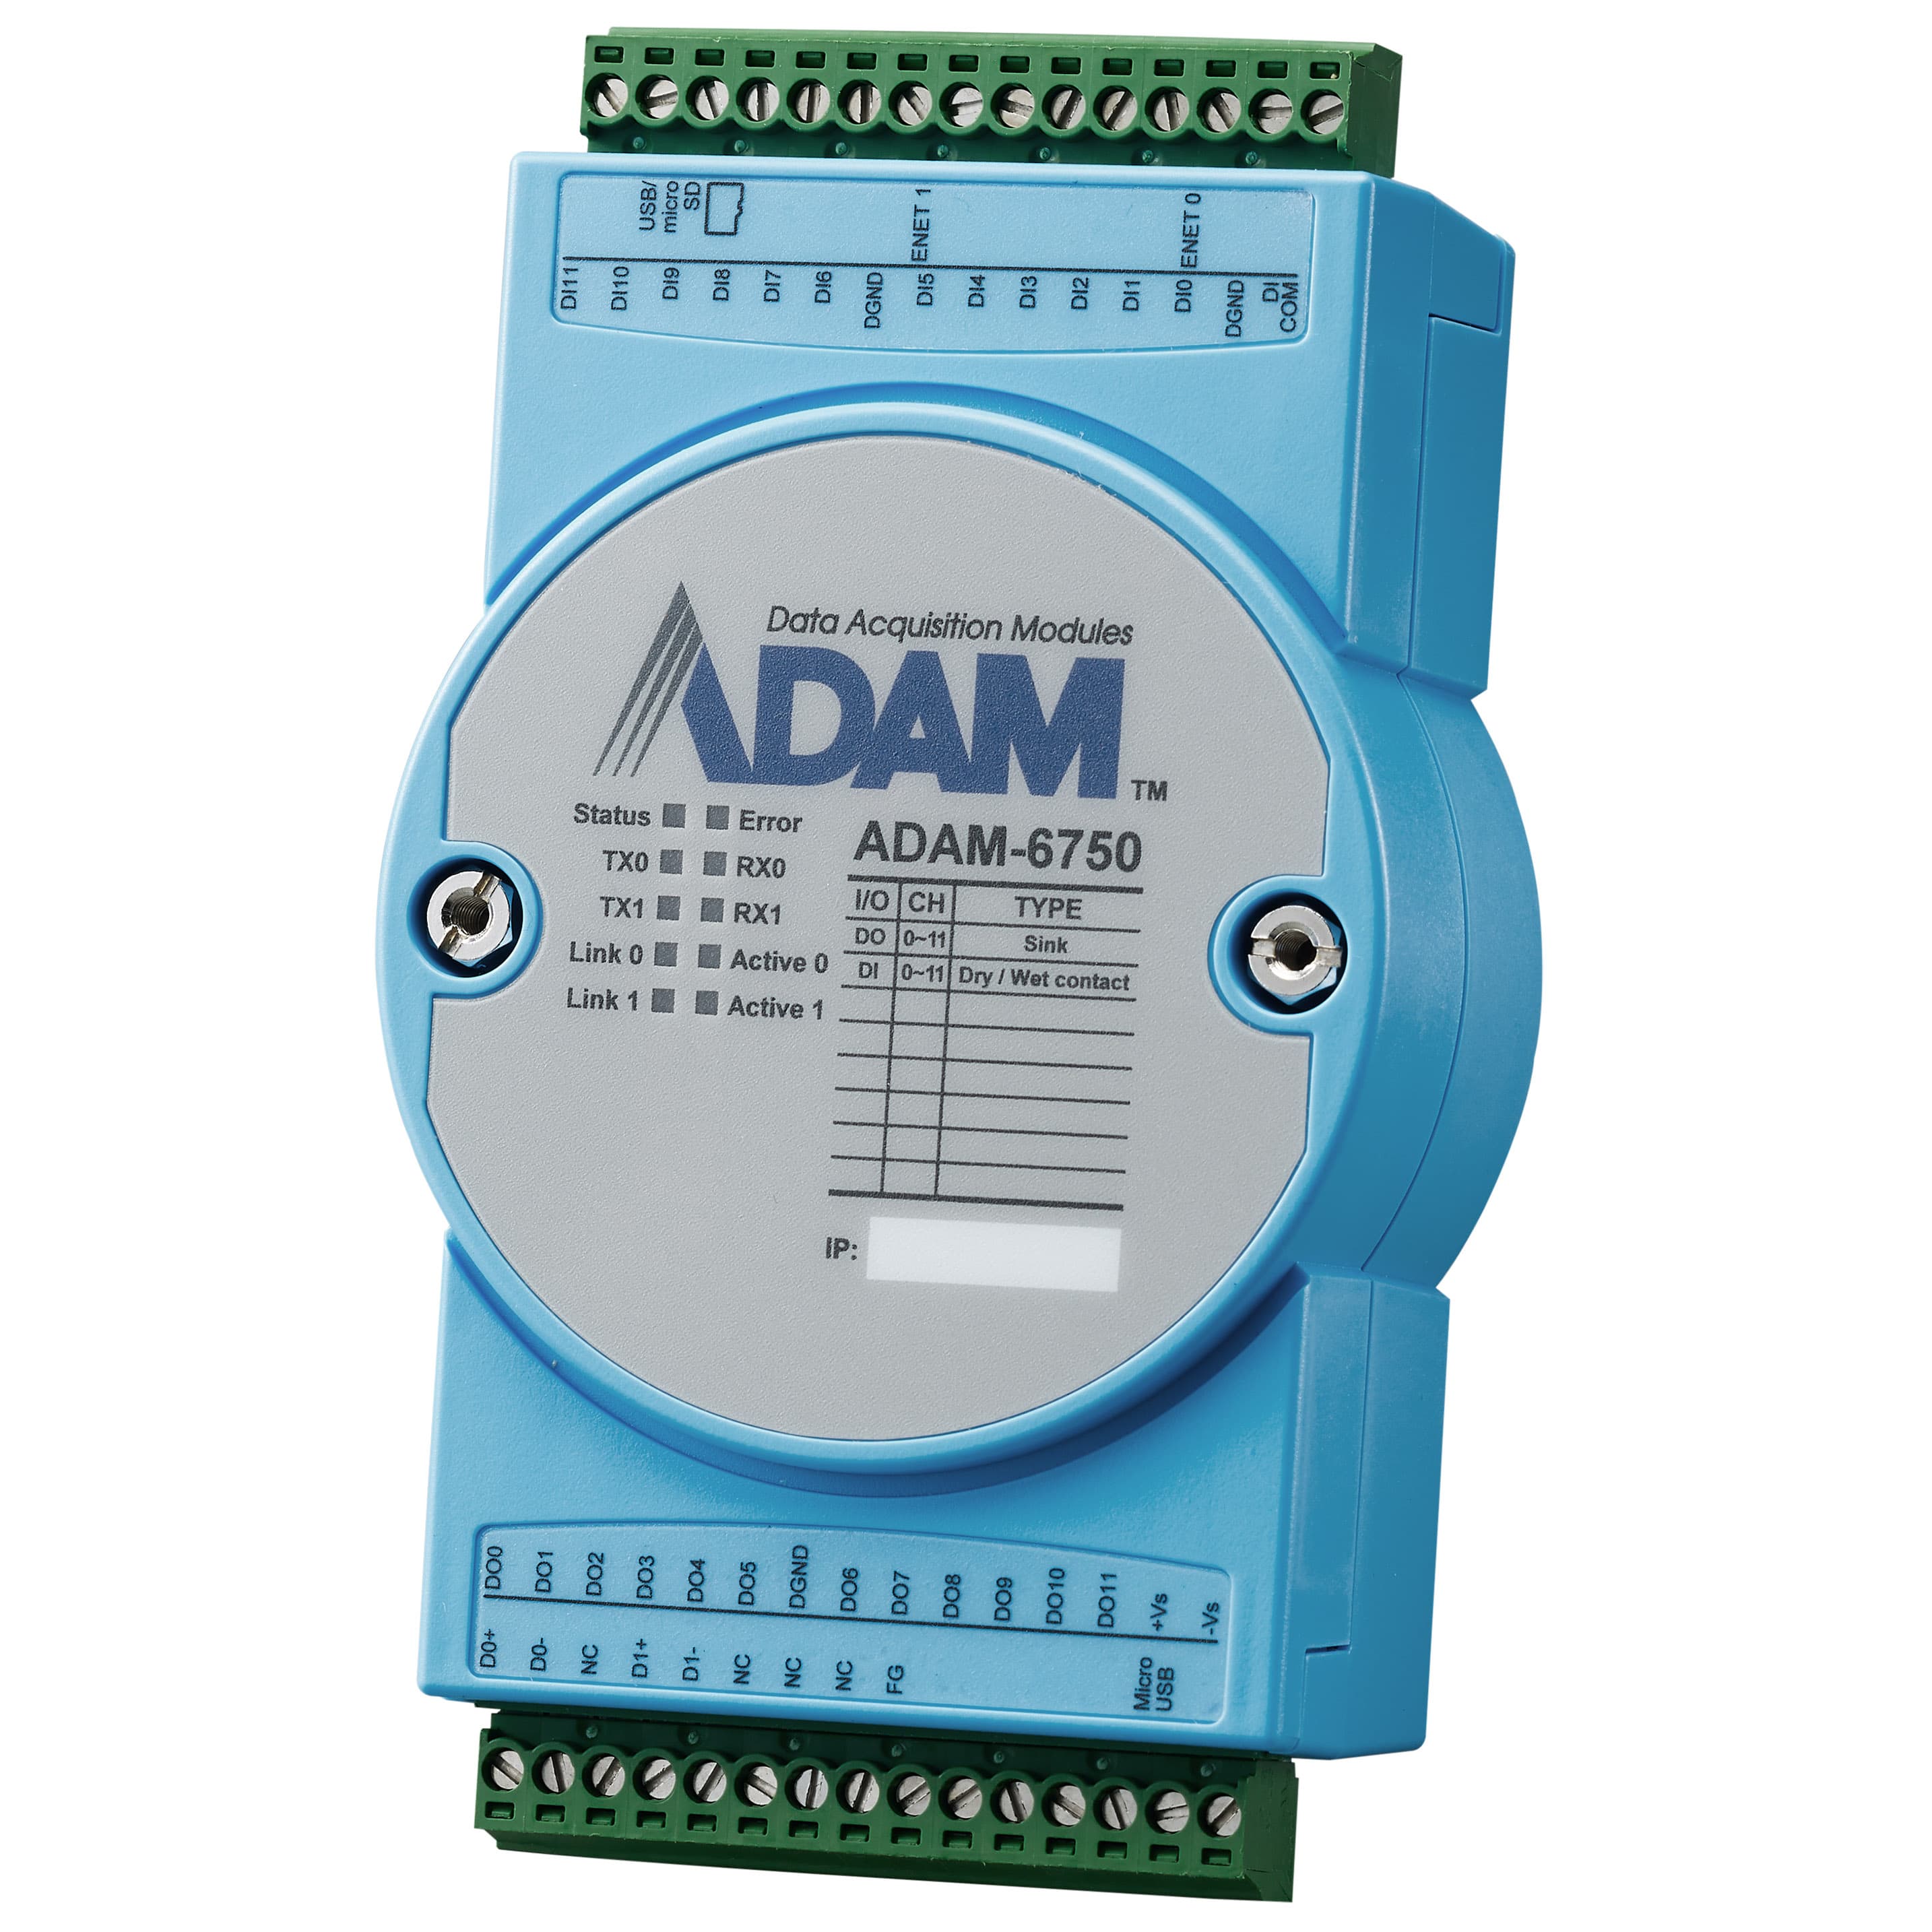 ADAM-6750 Edge Gateway